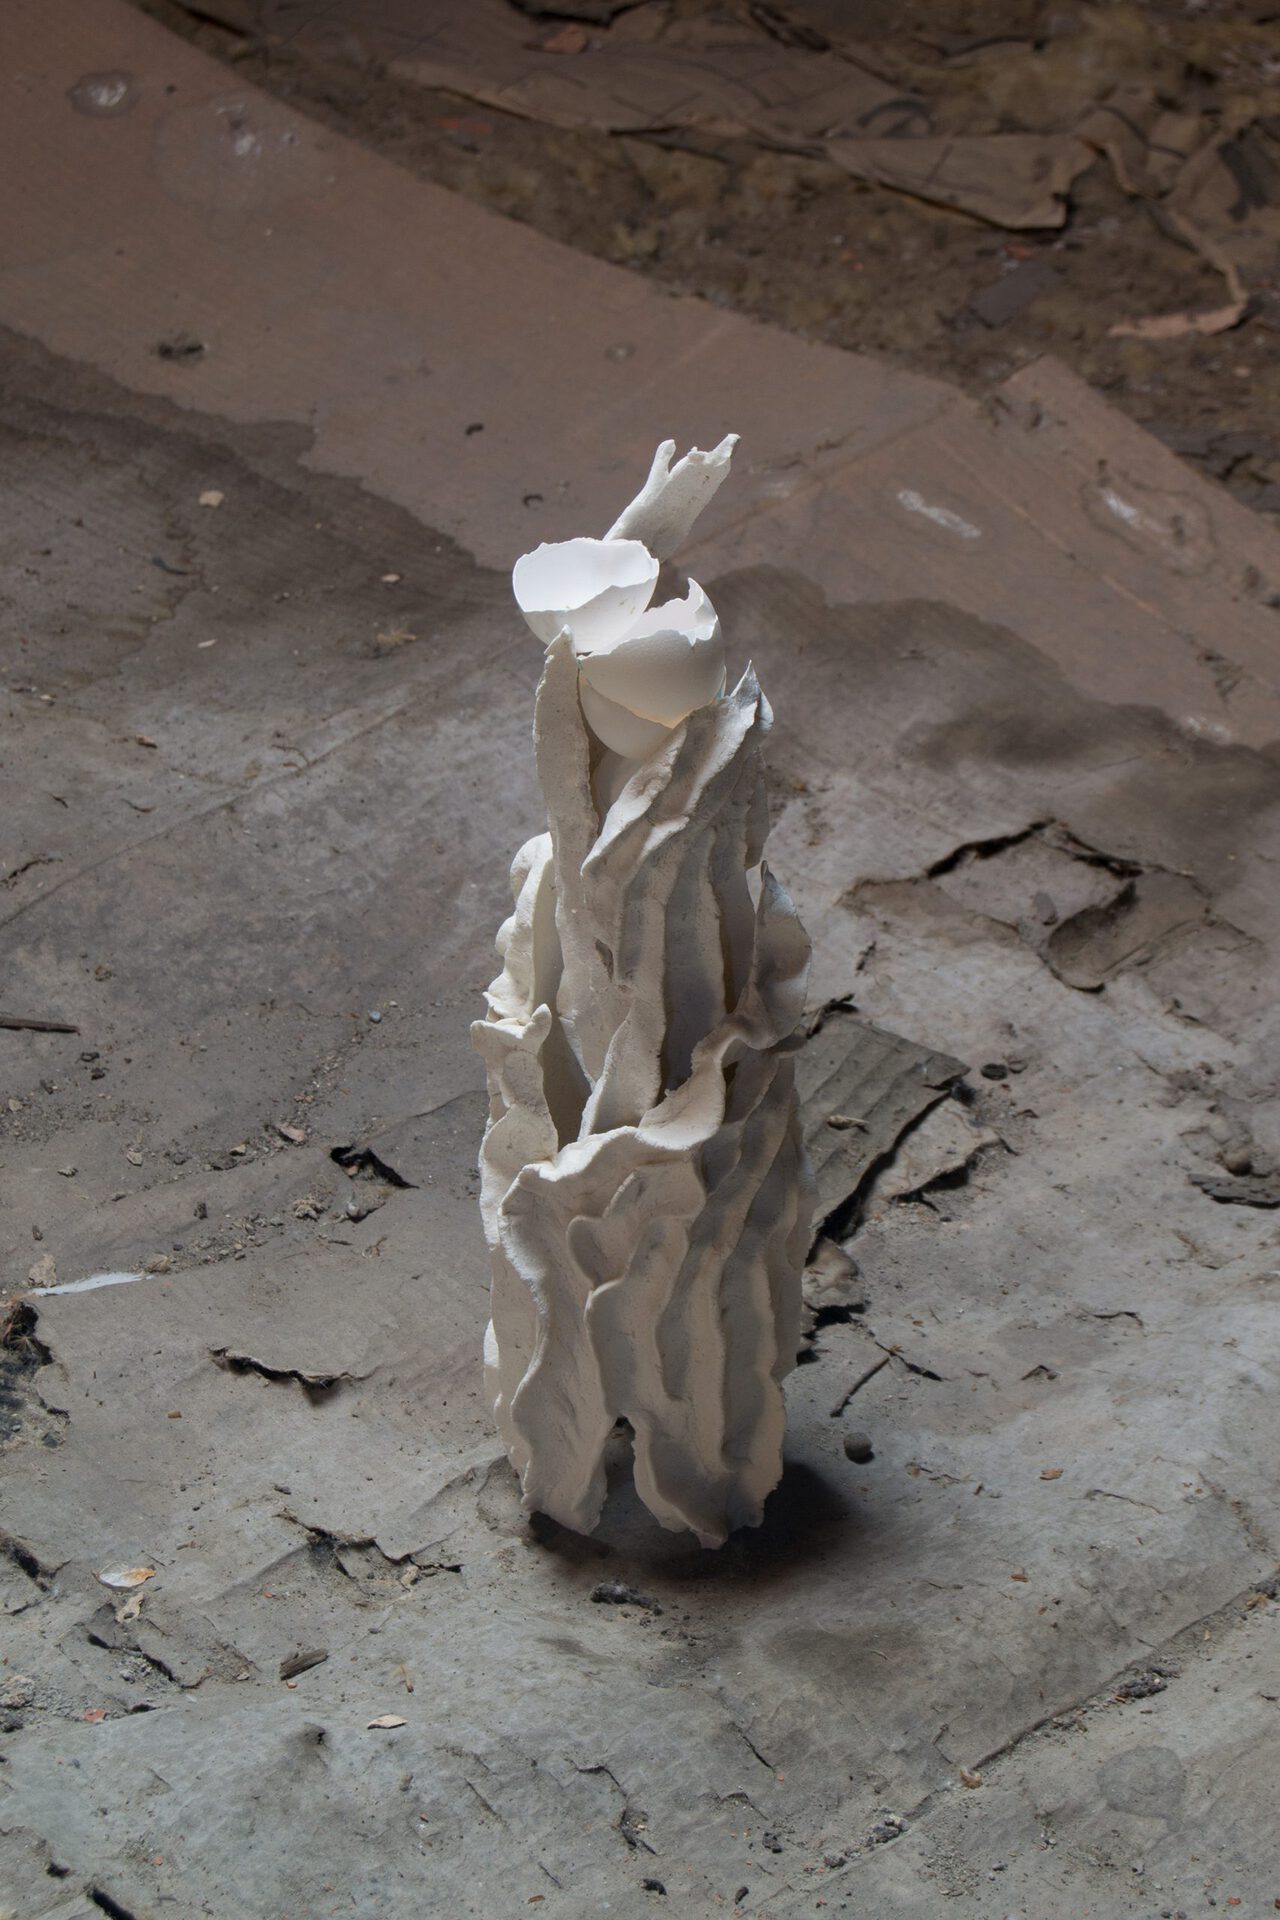 Paolo Brambilla, Salmastro, 2020, salt dough, eggshells, 10x10x30 cm.